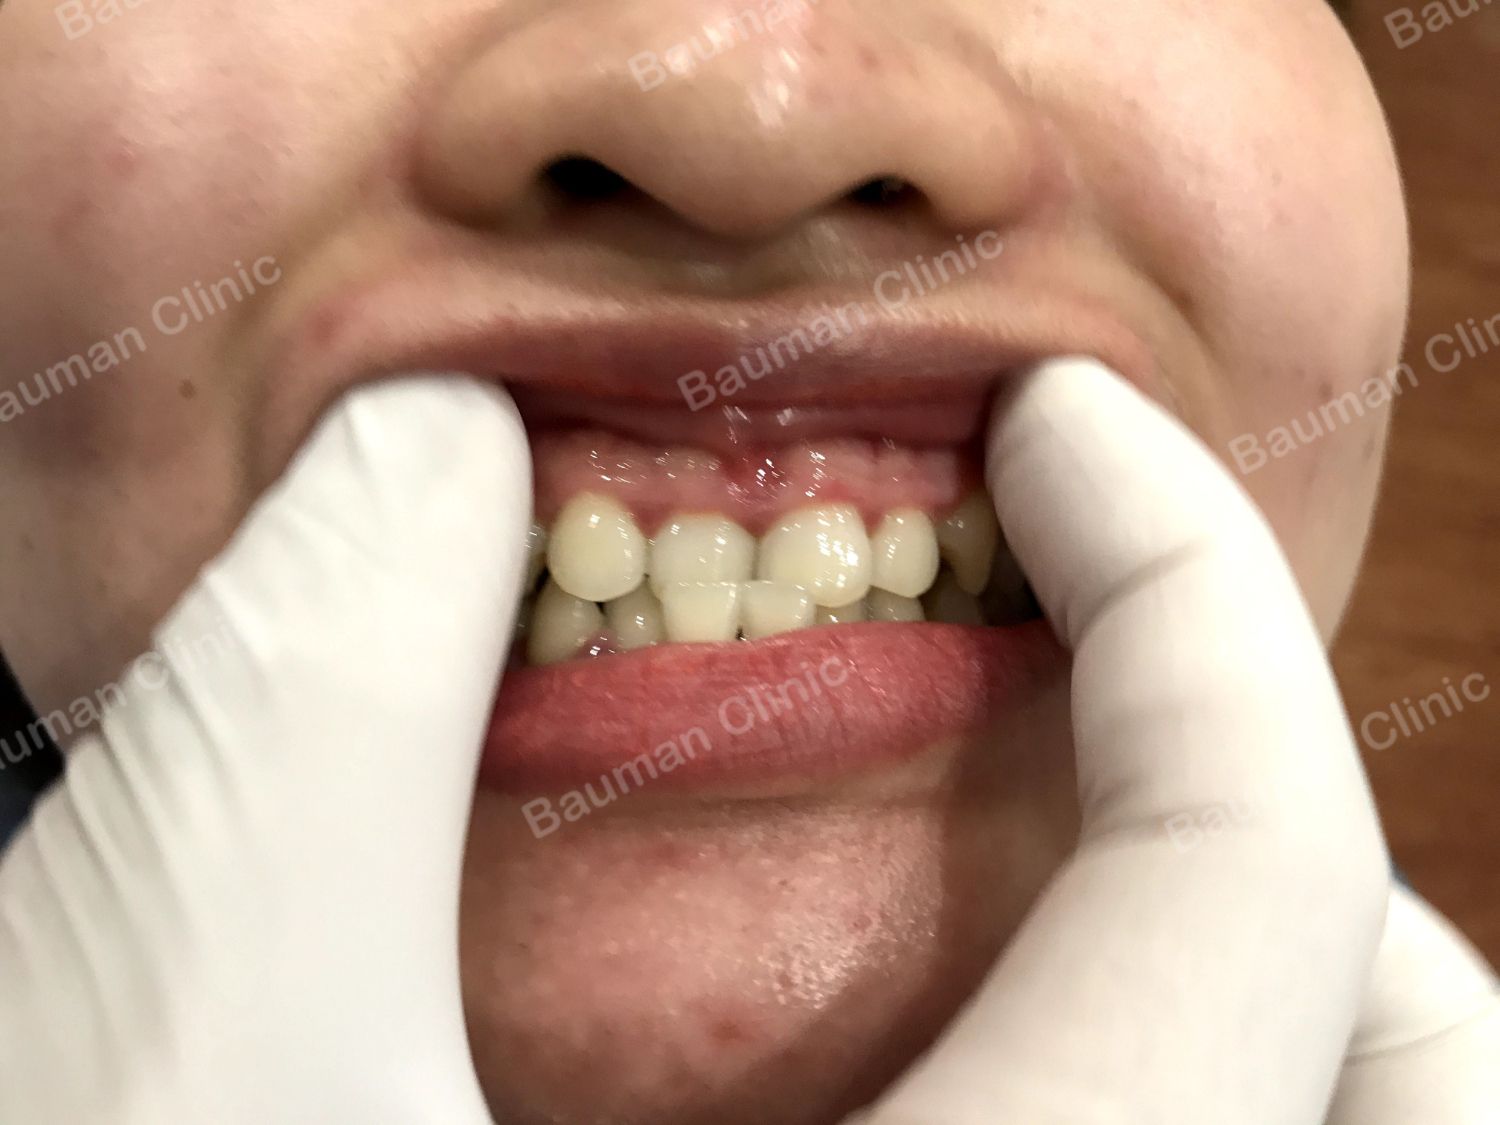 Ca niềng răng số 5015 - Nha khoa Bauman Clinic